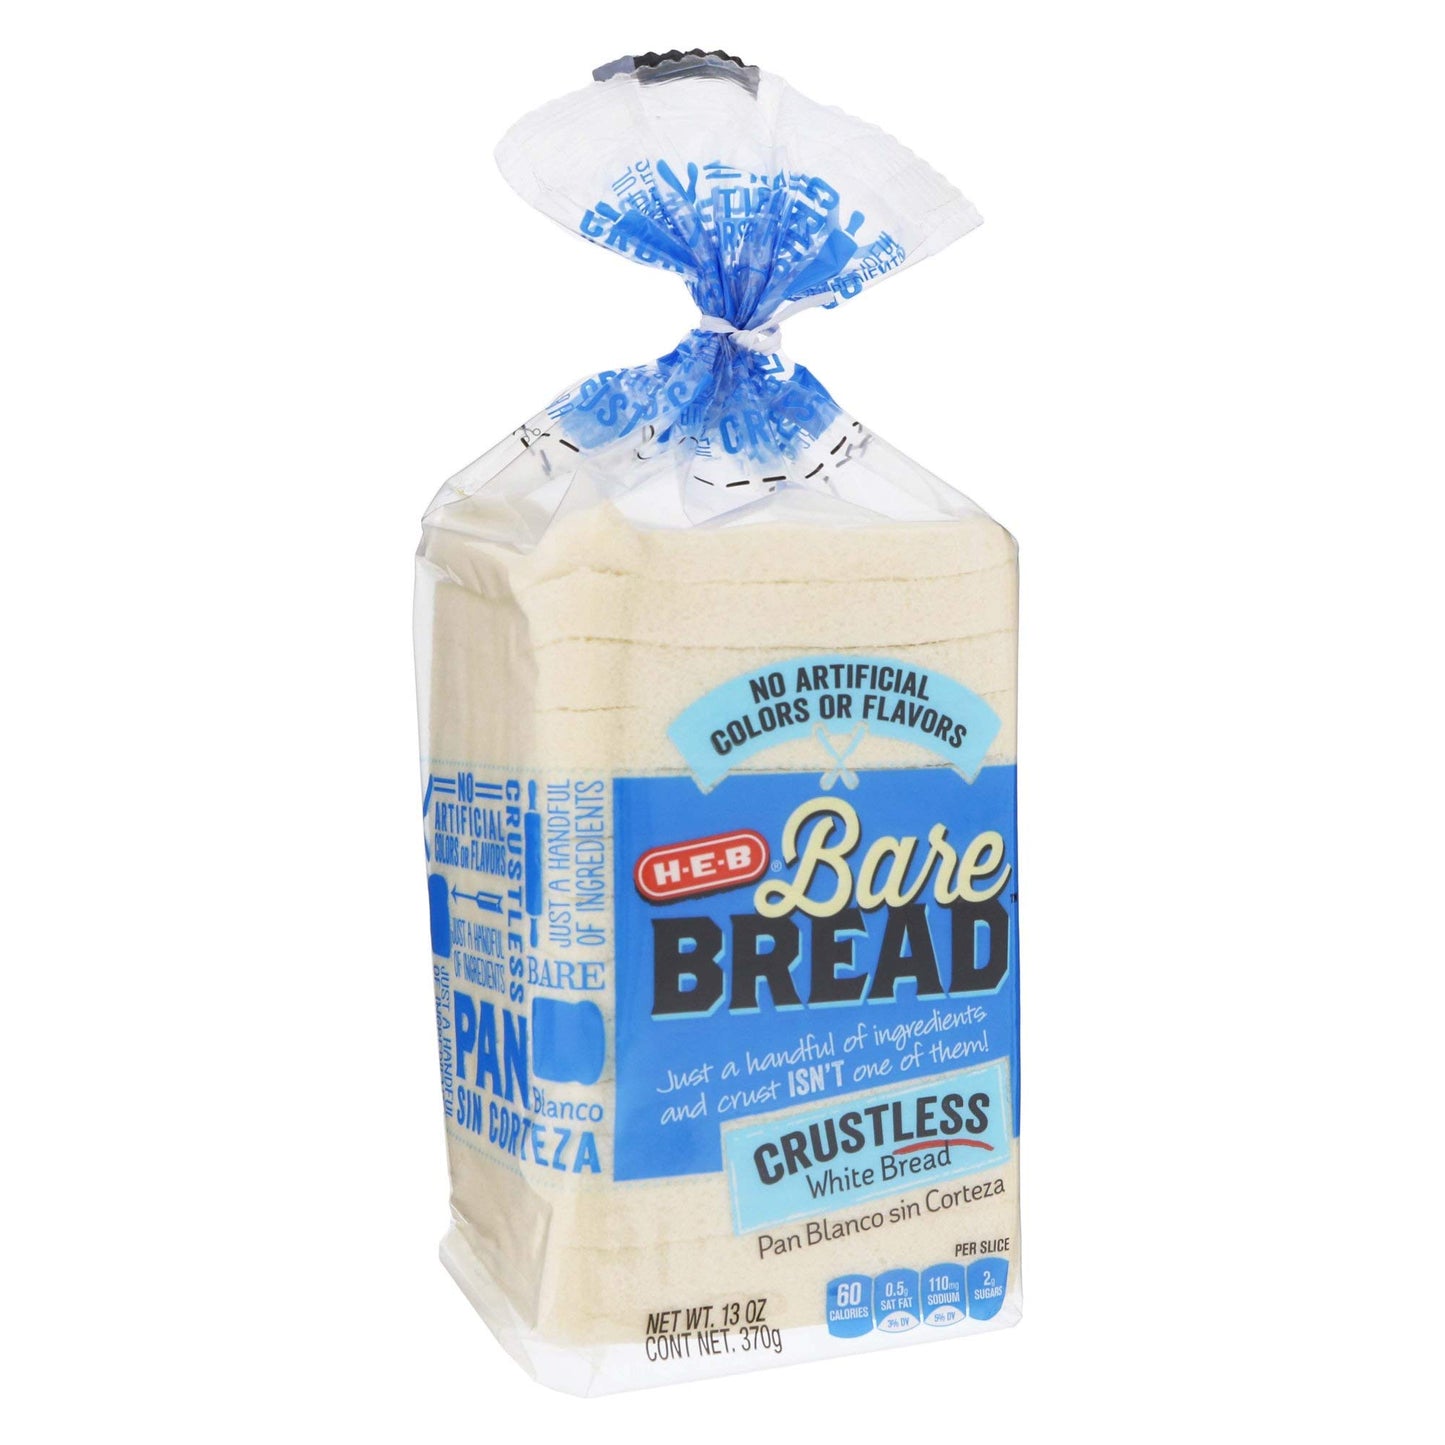 HEB Bare Bread Crustless White Bread 12.5 Oz (Pack of 2)